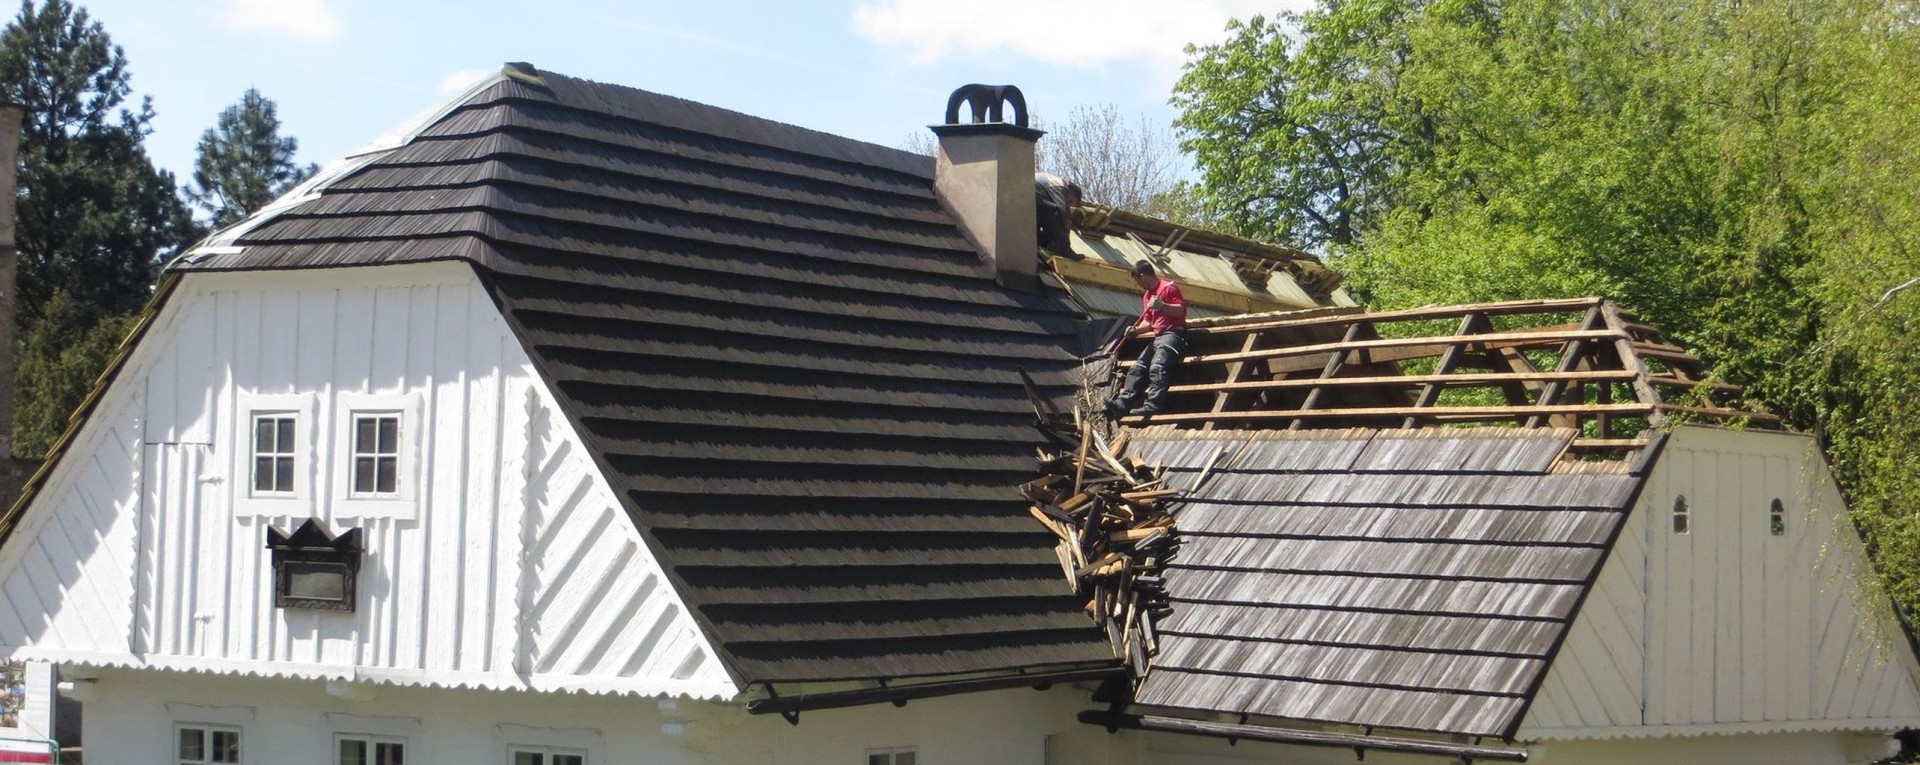 Passaic County NJ Roofers